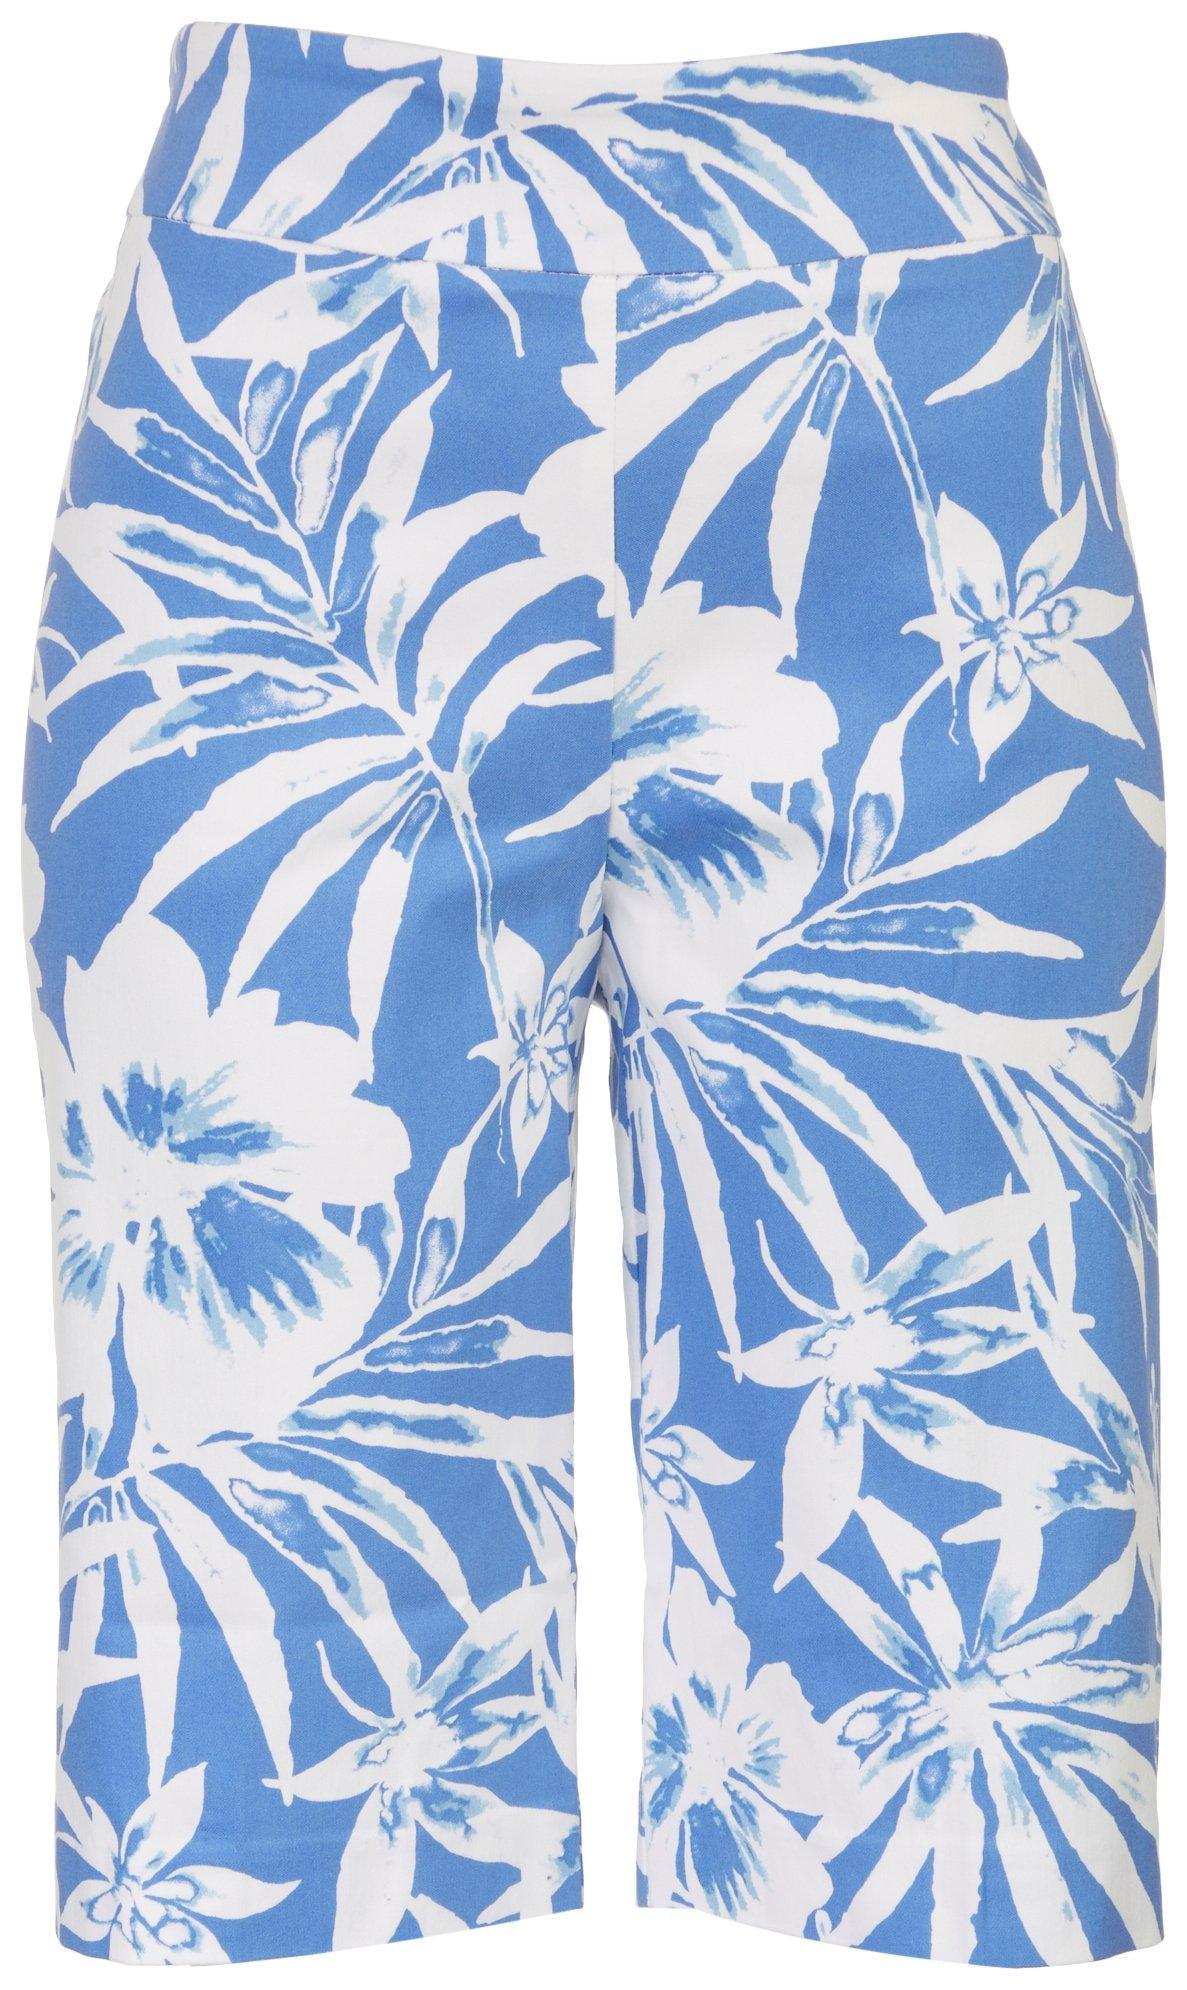 Counterparts Womens Pull-On Print Bermuda Shorts 6 Blue multi - Walmart.com